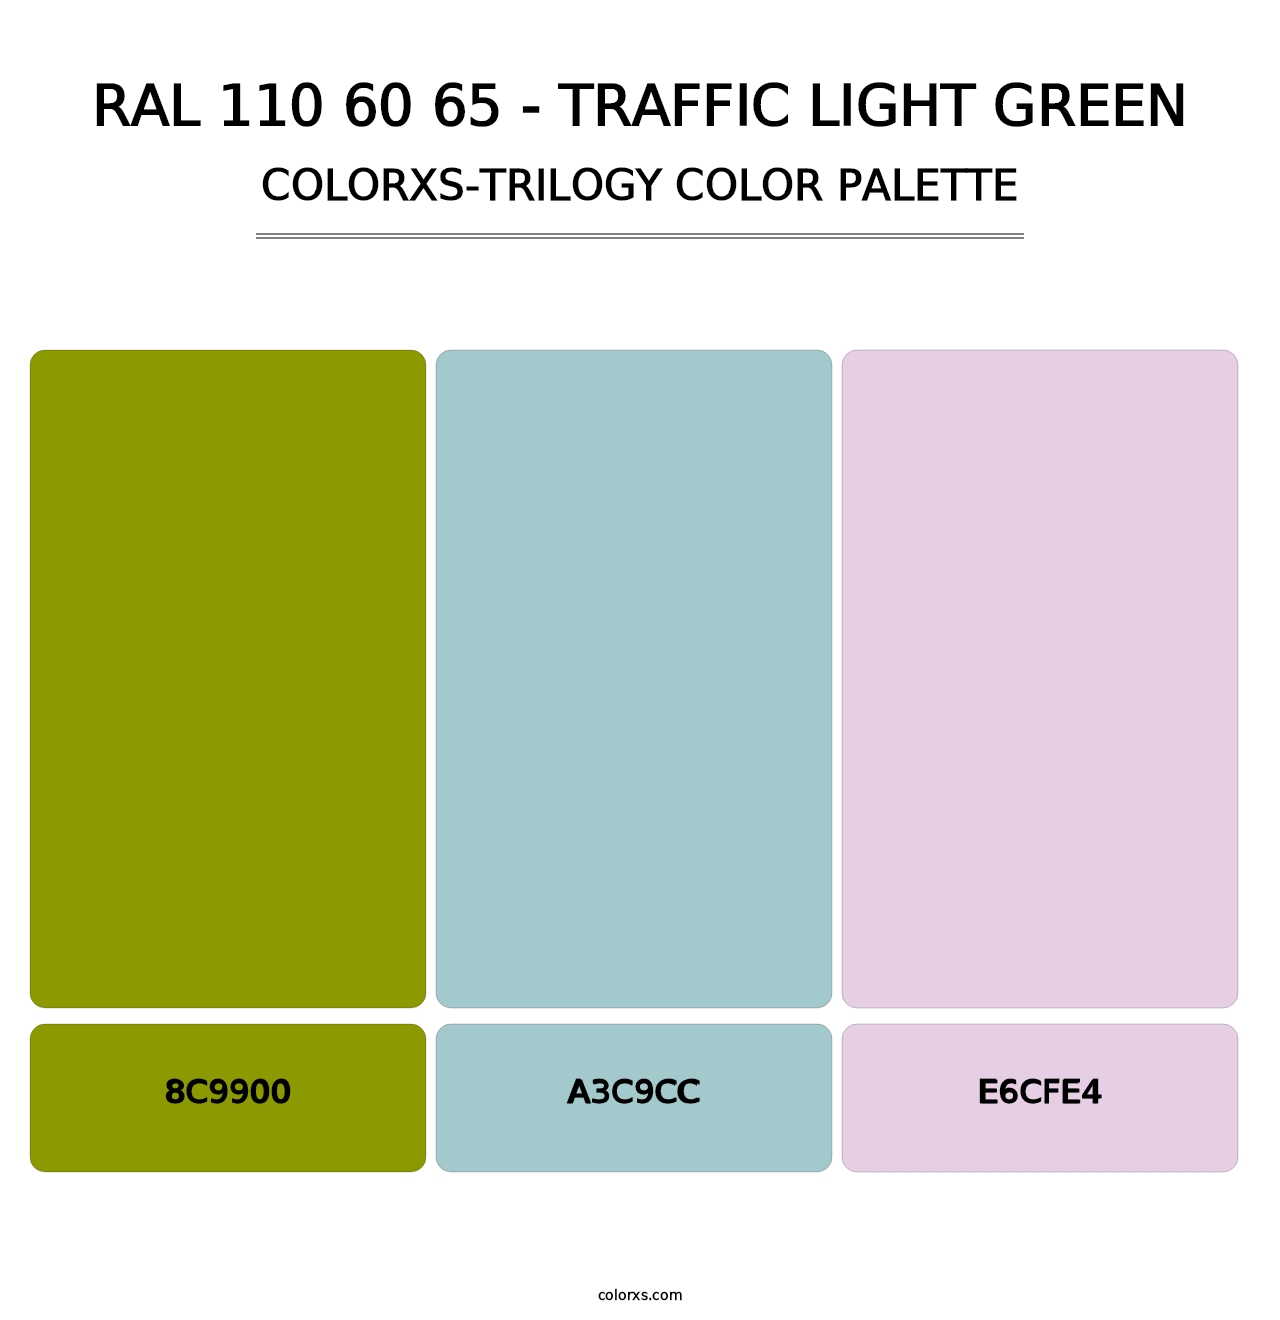 RAL 110 60 65 - Traffic Light Green - Colorxs Trilogy Palette